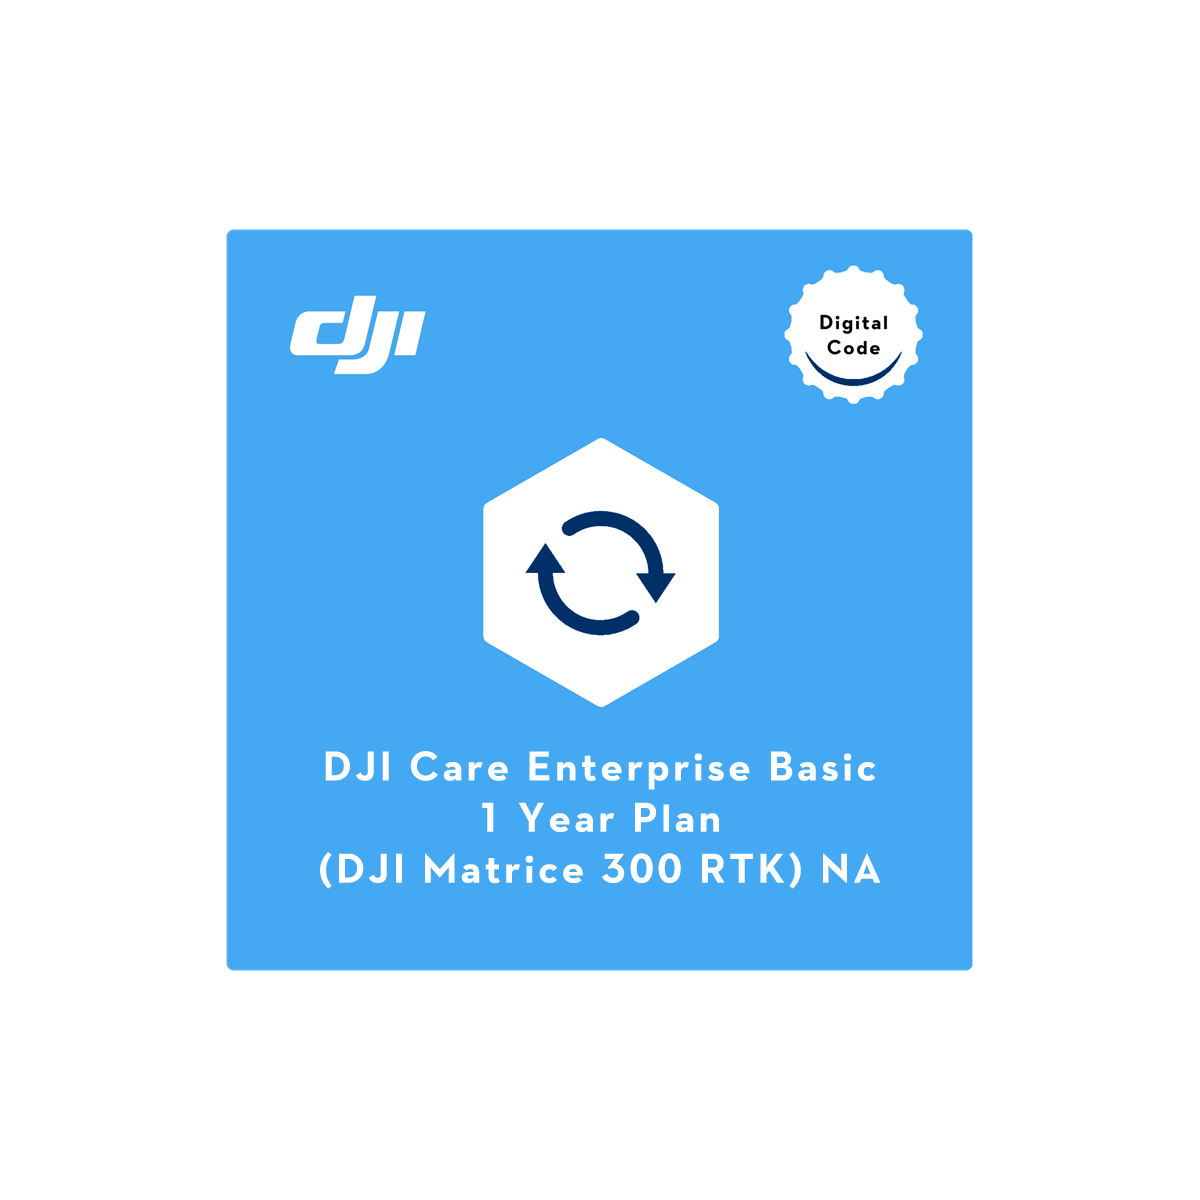 DJI Care Enterprise Basic (M300 RTK) NA